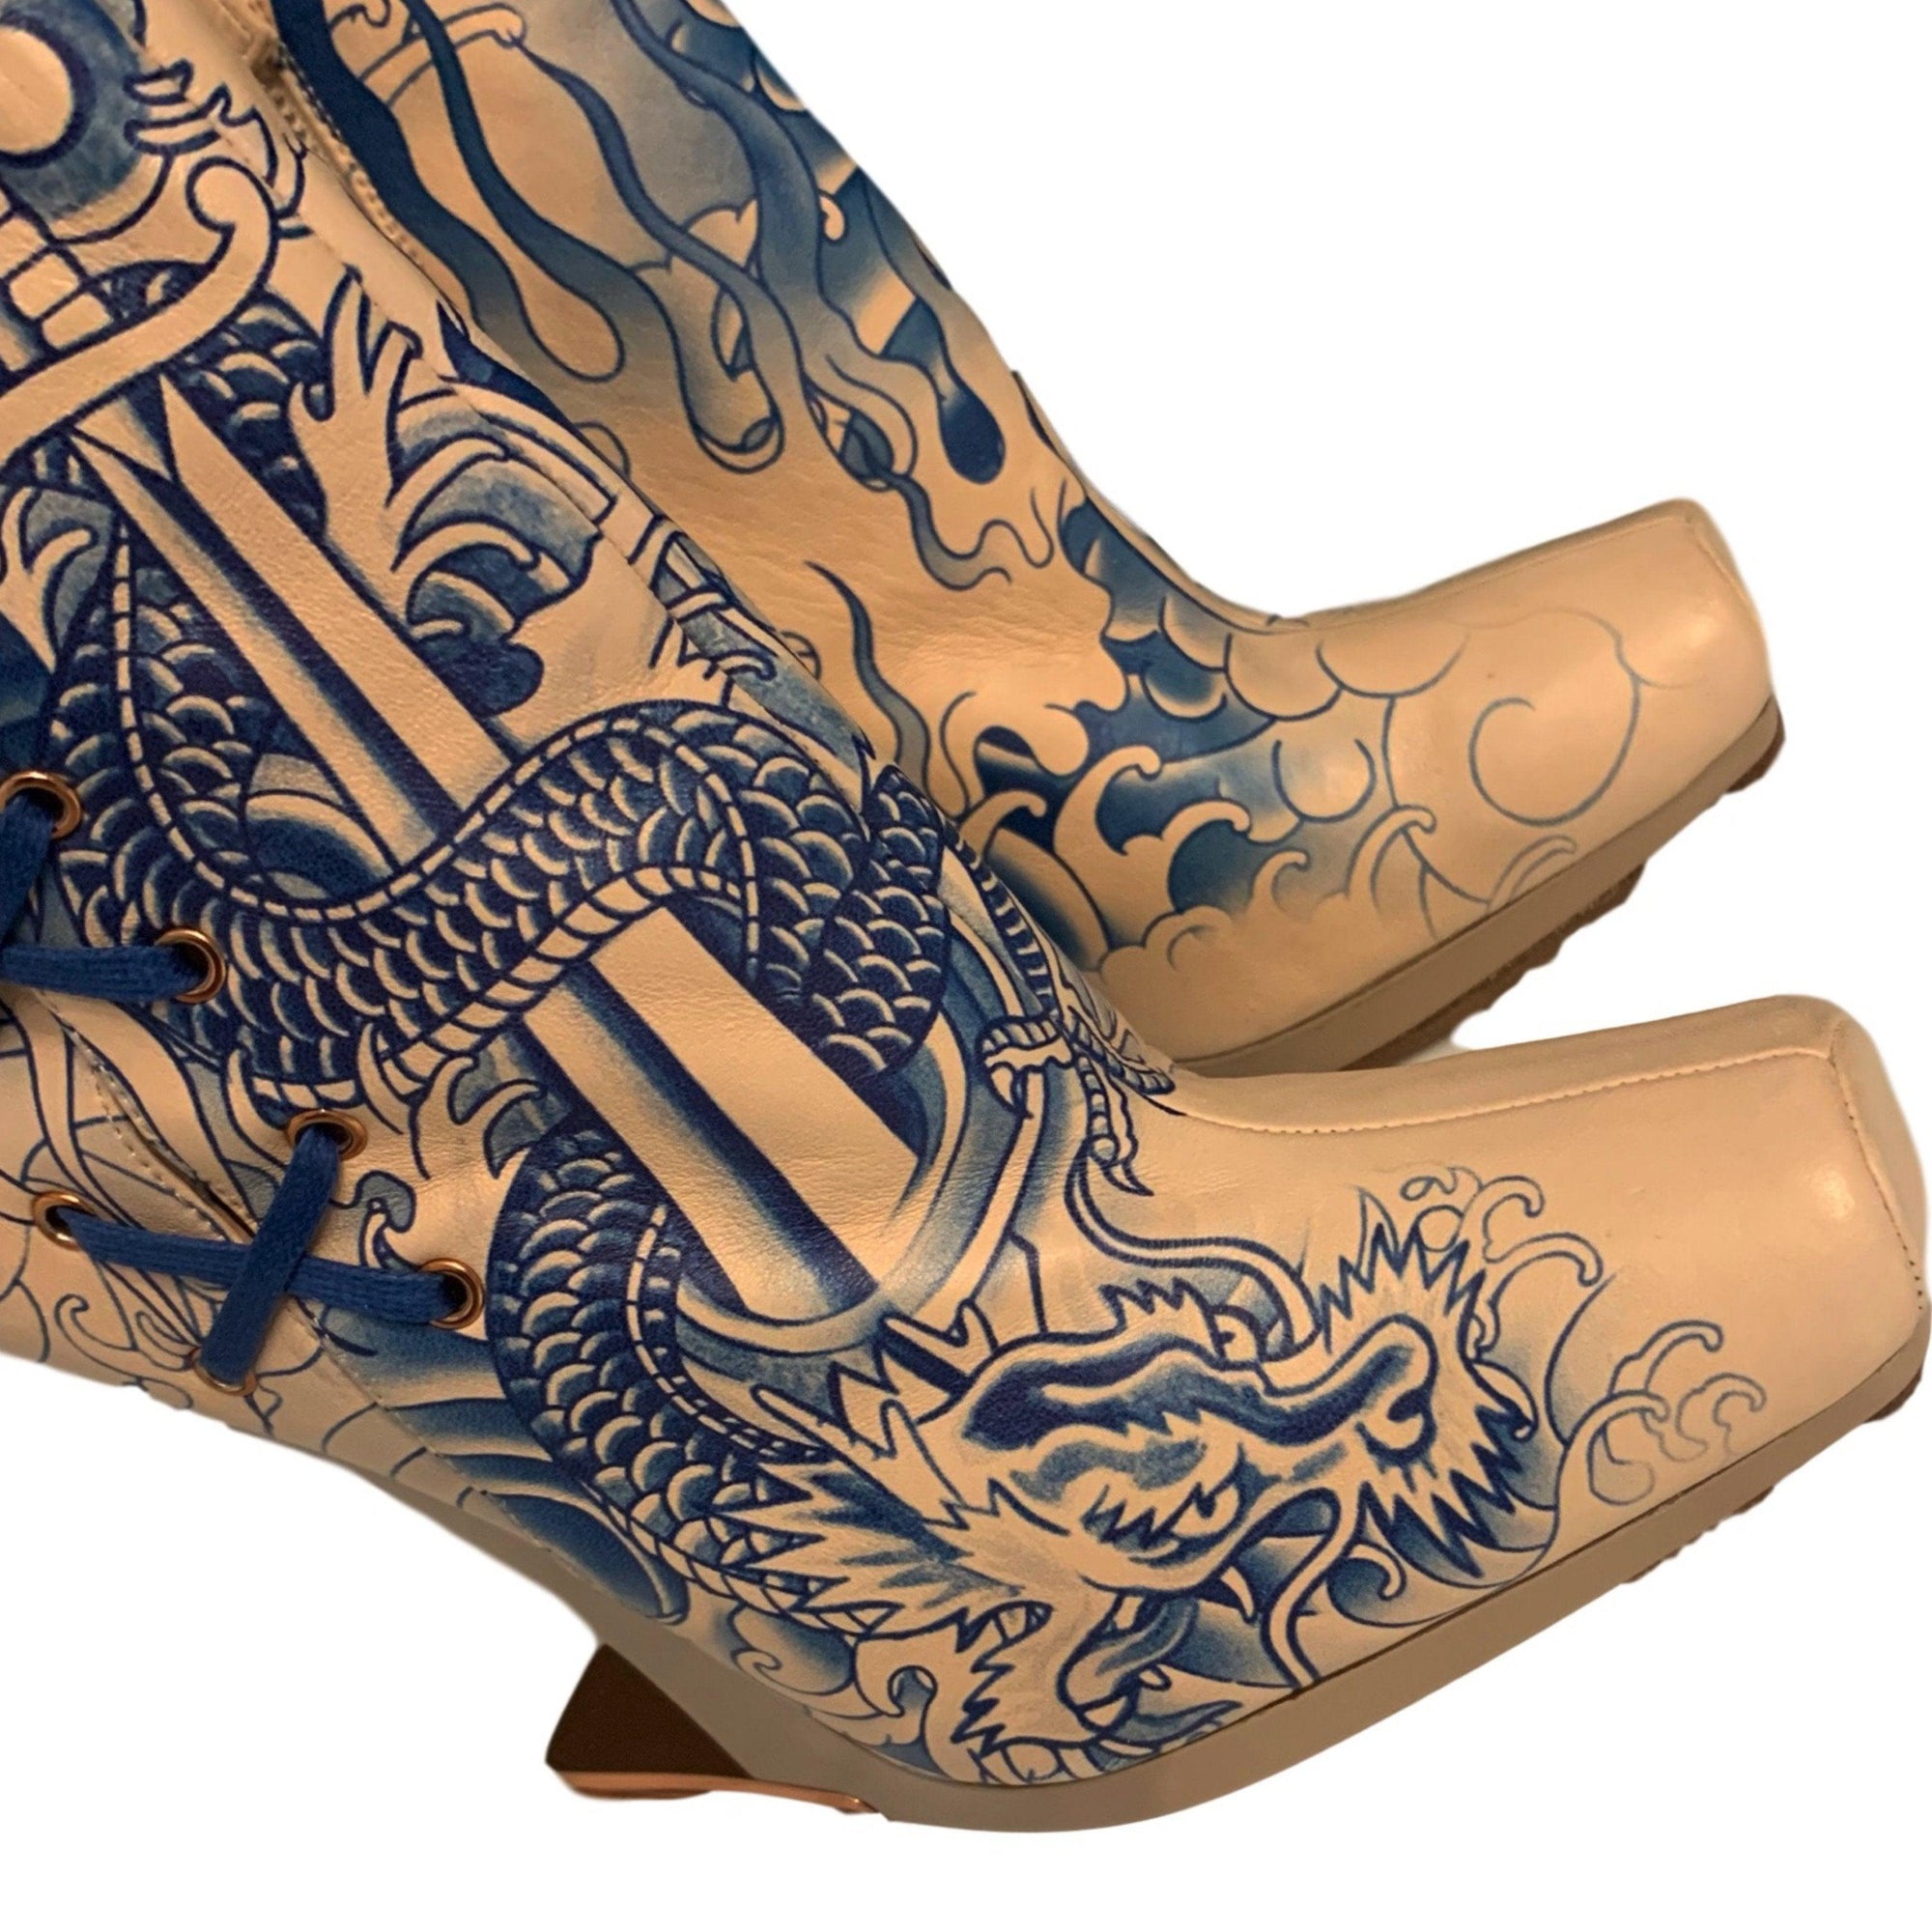 Jean Paul Gaultier Tattoo Booties - Shoes